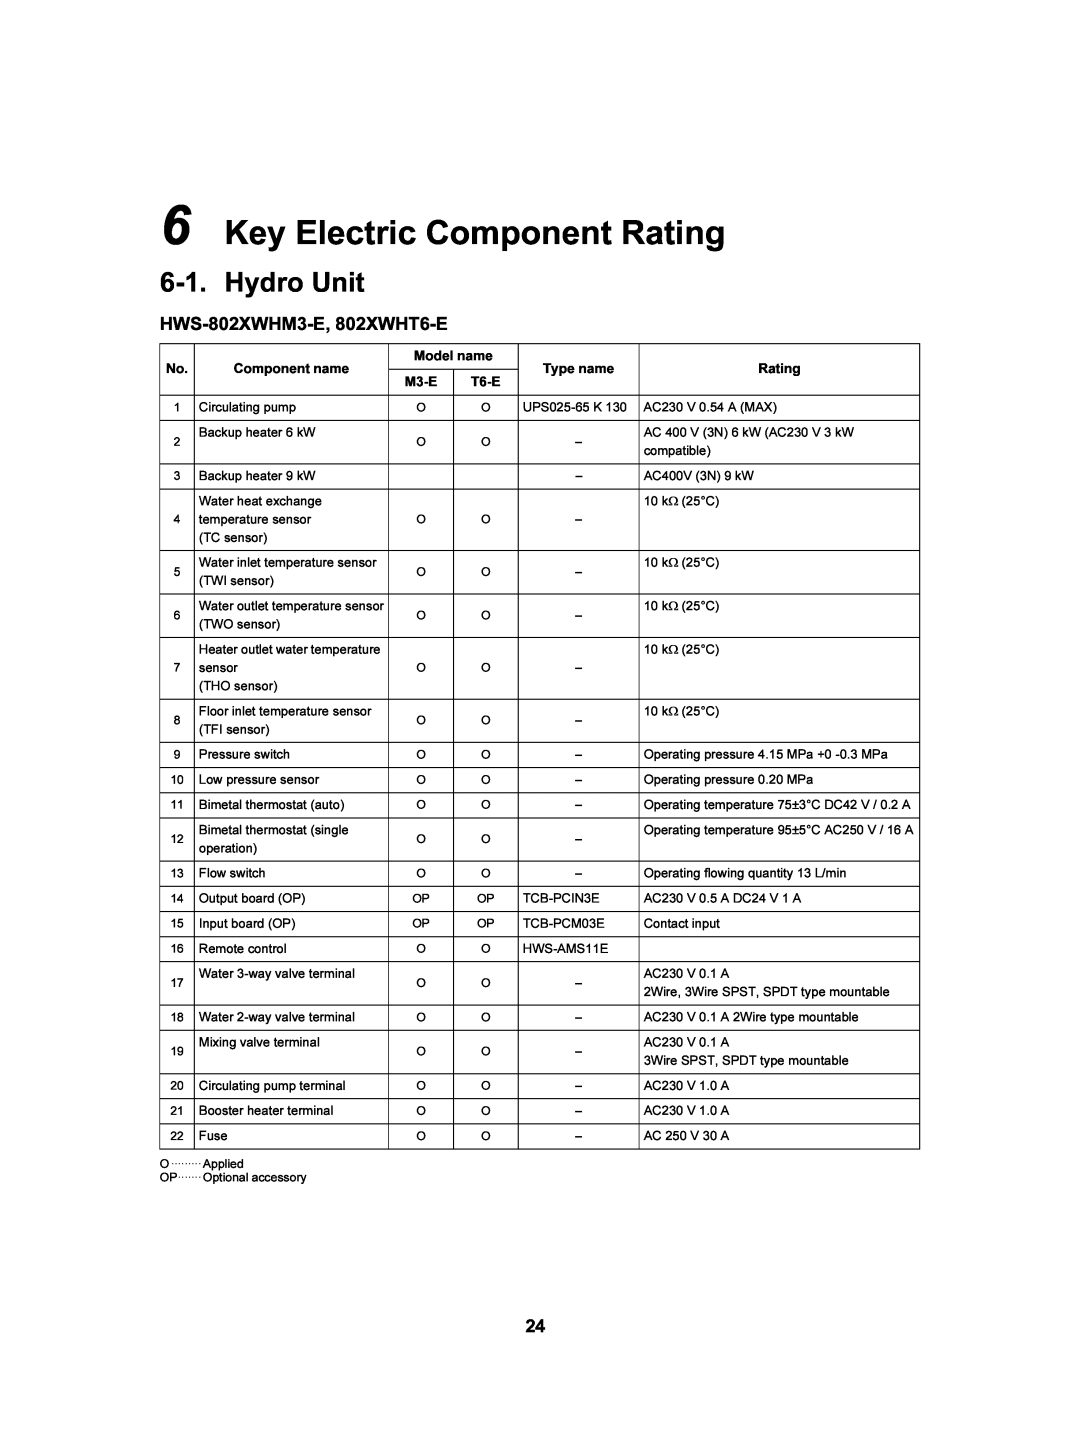 Toshiba HWS-1402H-E, HWS-802XWHT6-E, HWS-802H-E Key Electric Component Rating, Hydro Unit, HWS-802XWHM3-E, 802XWHT6-E 